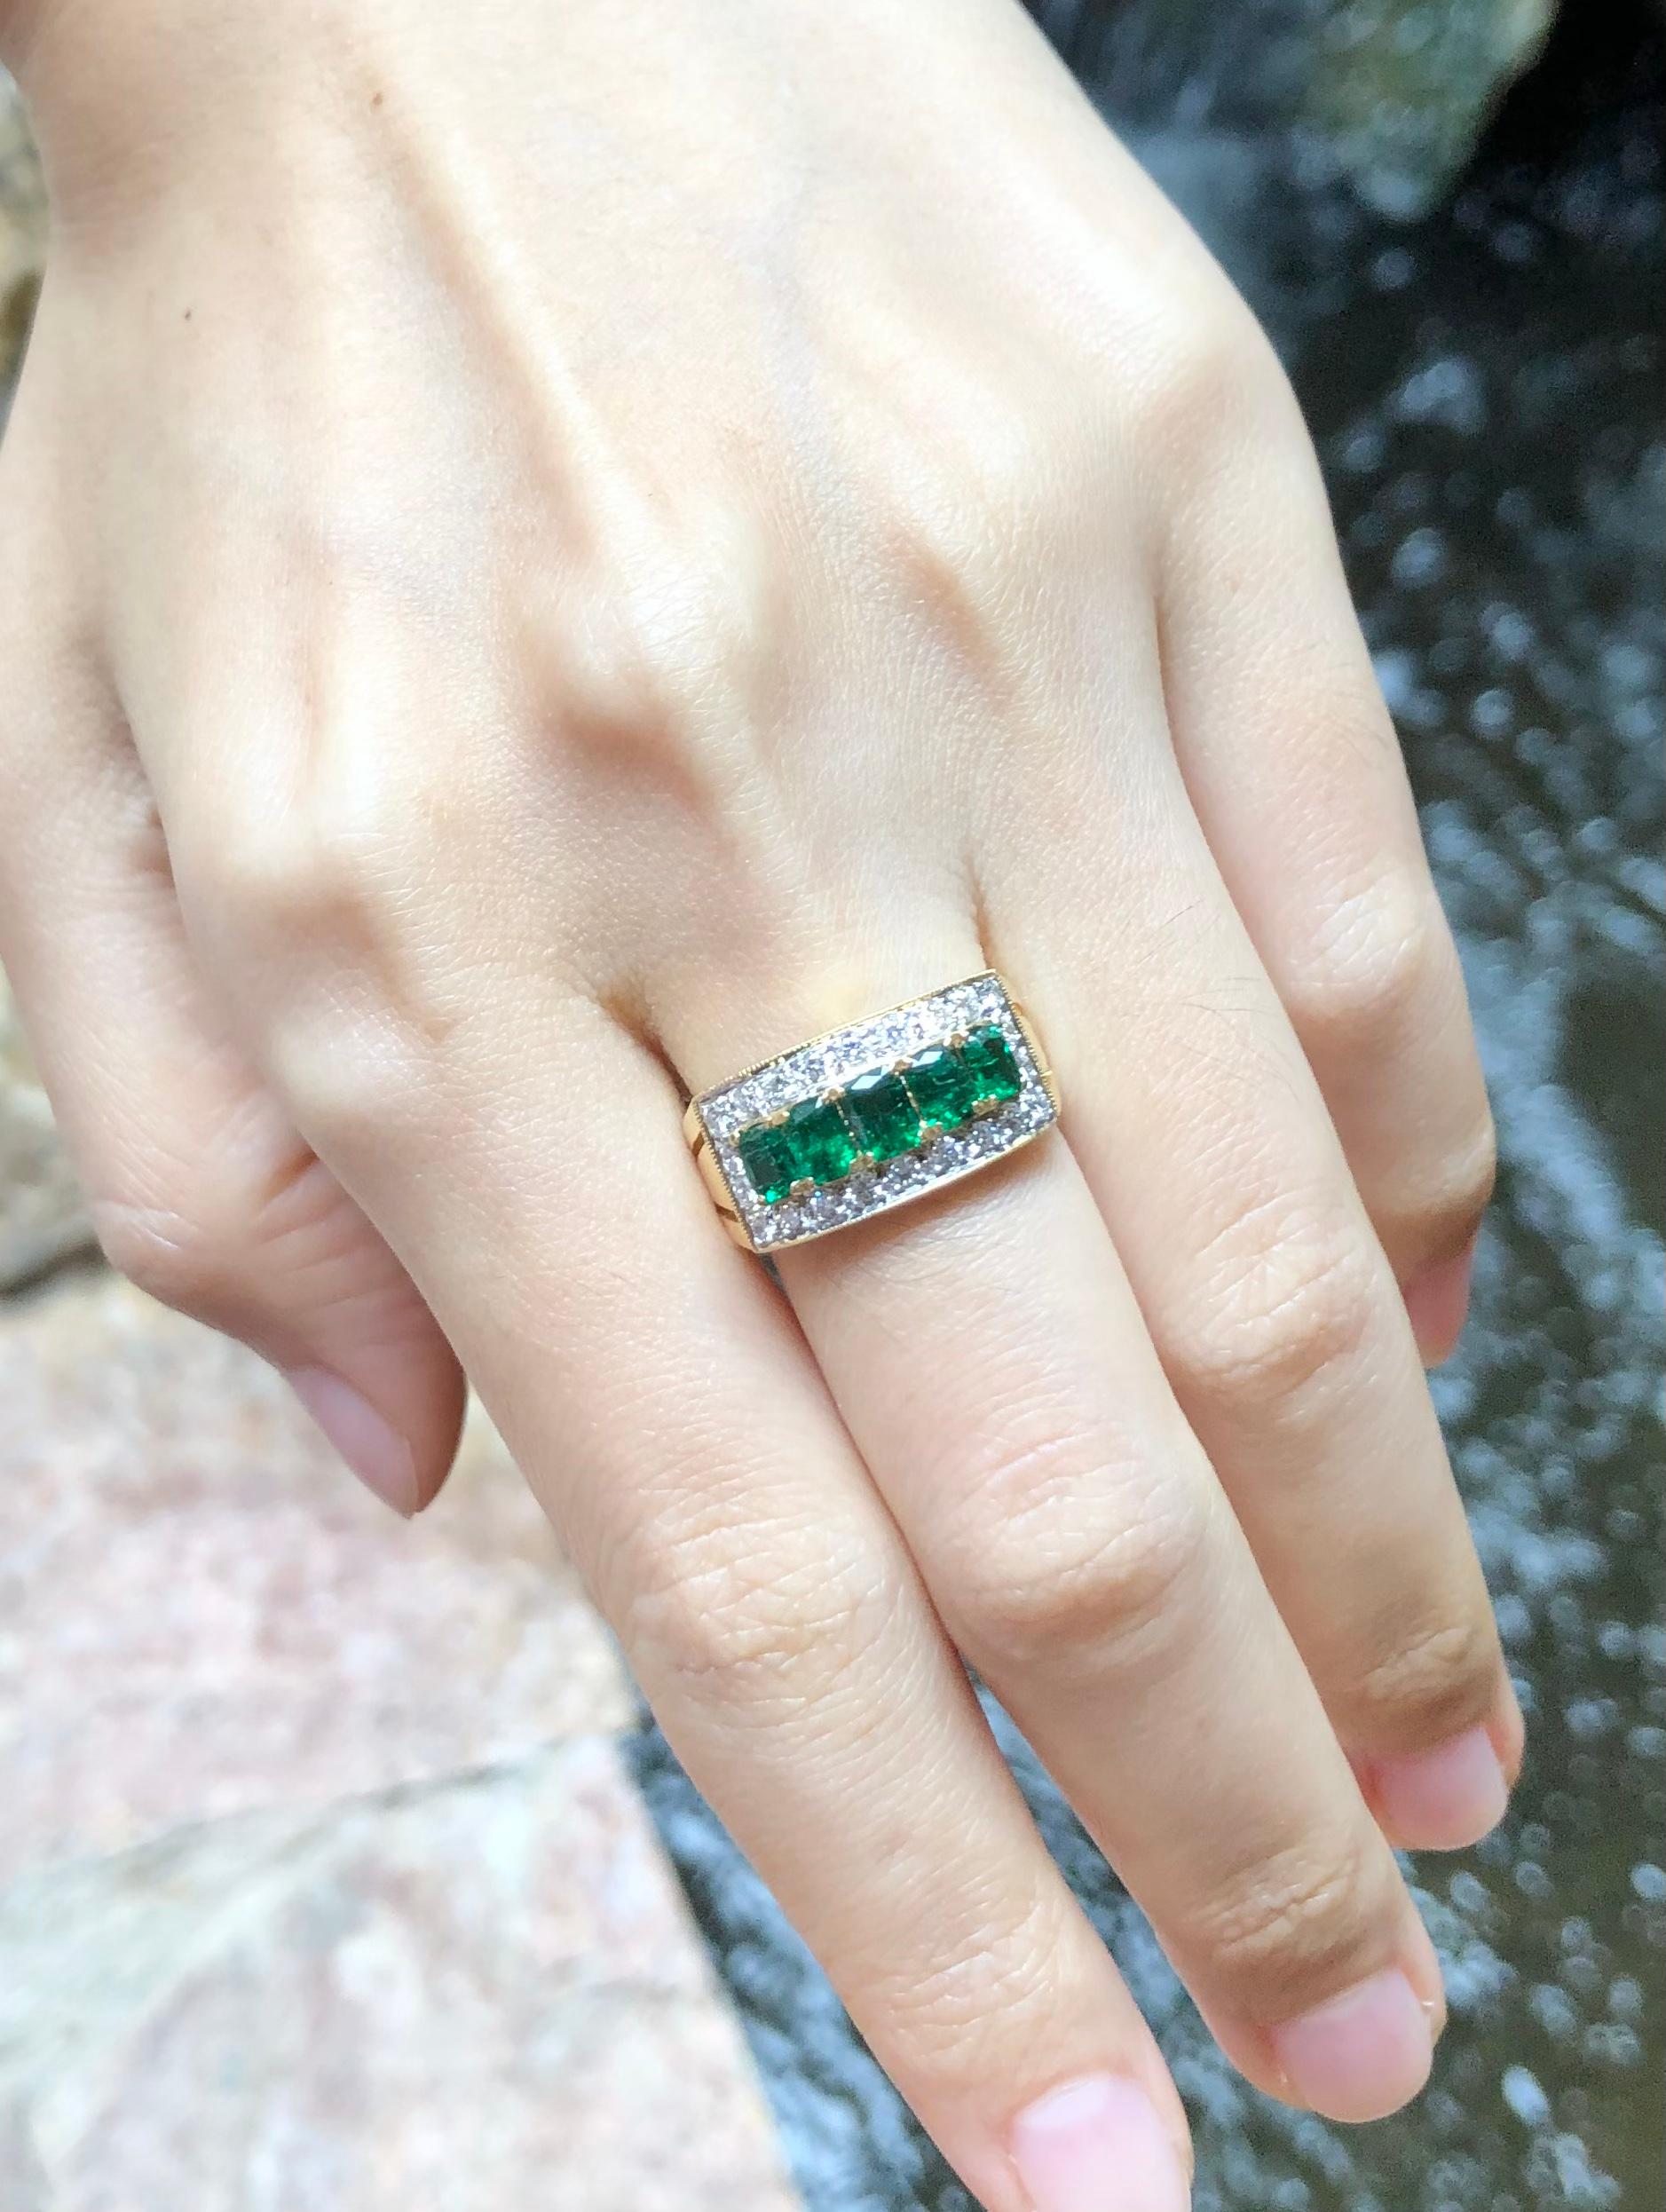 Emerald 0.93 carat with Diamond 0.44 carat Ring set in 18 Karat Gold Settings

Width:  1.7 cm 
Length: 1.0 cm
Ring Size: 54
Total Weight: 6.95 grams

